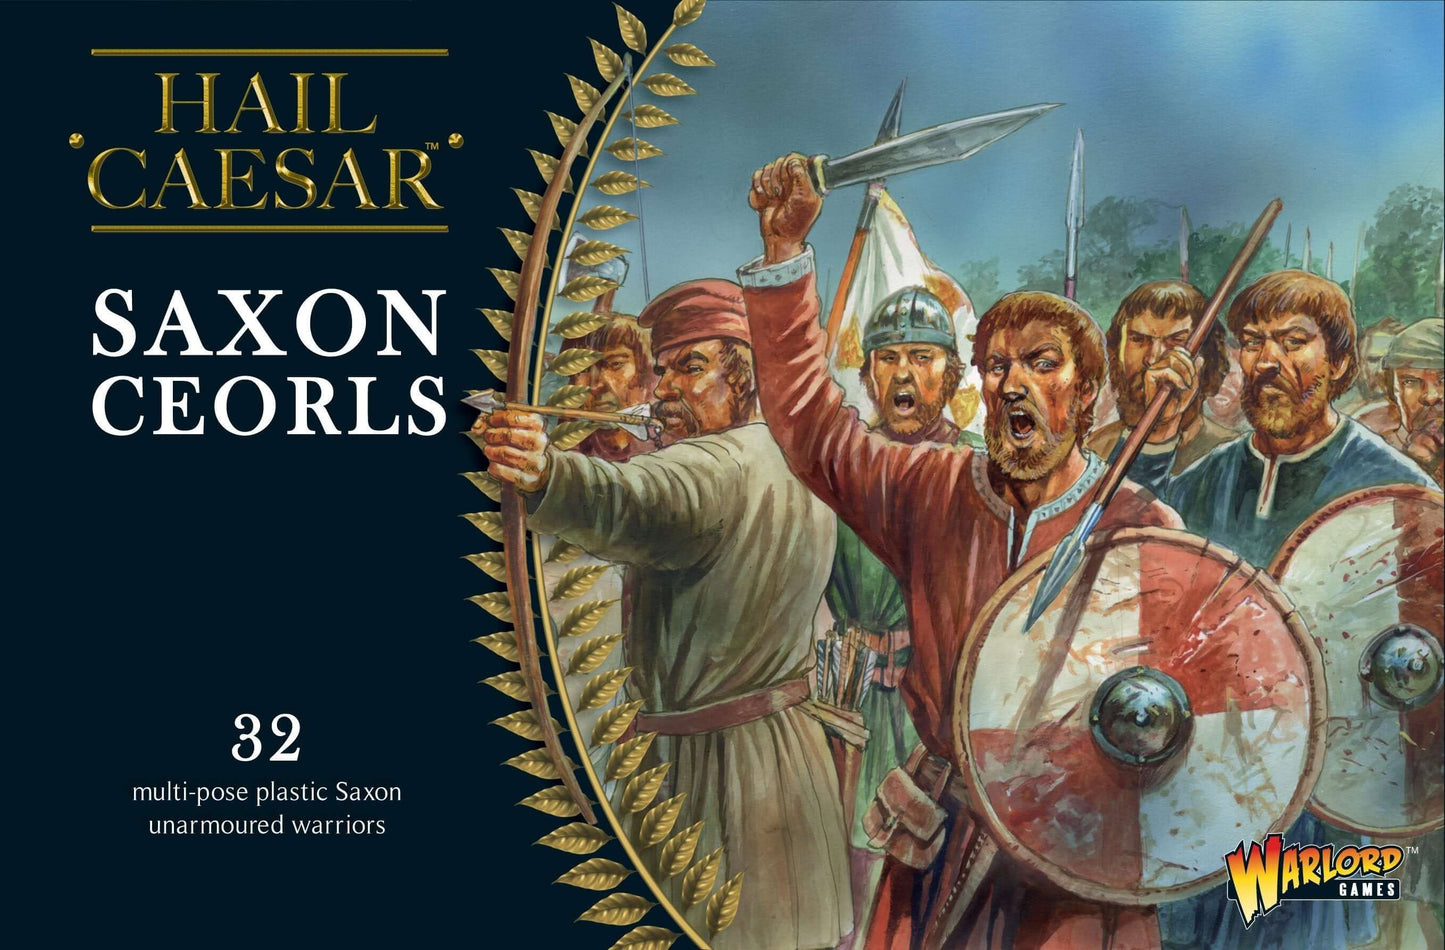 Hail Caesar, Saxon Ceorls by Warlord